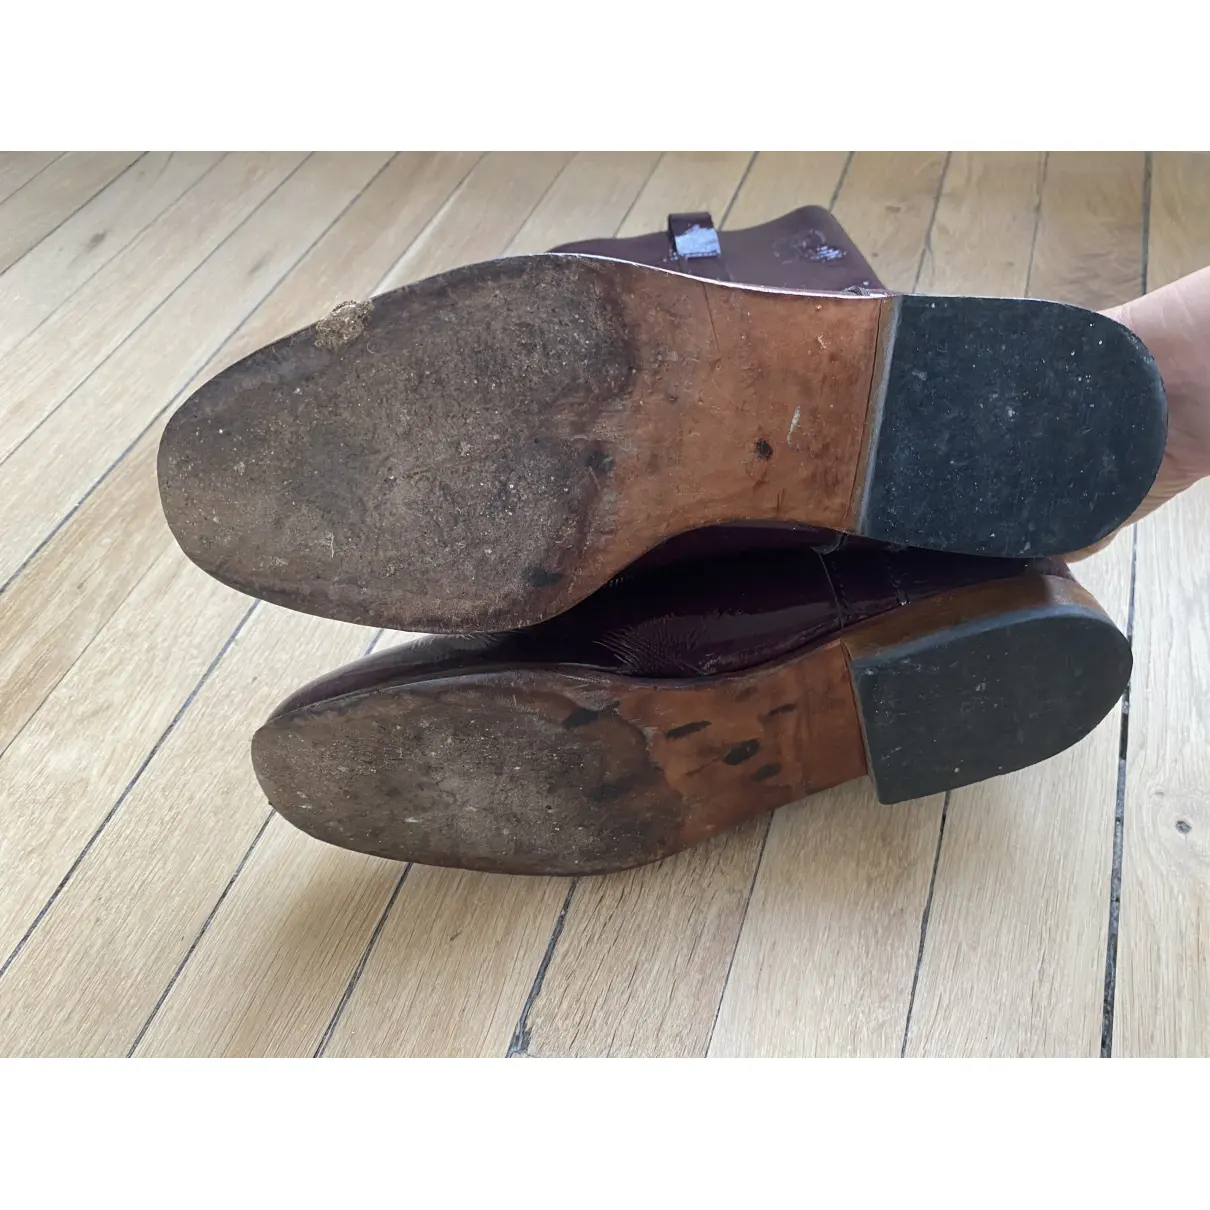 Patent leather western boots La Botte Gardiane